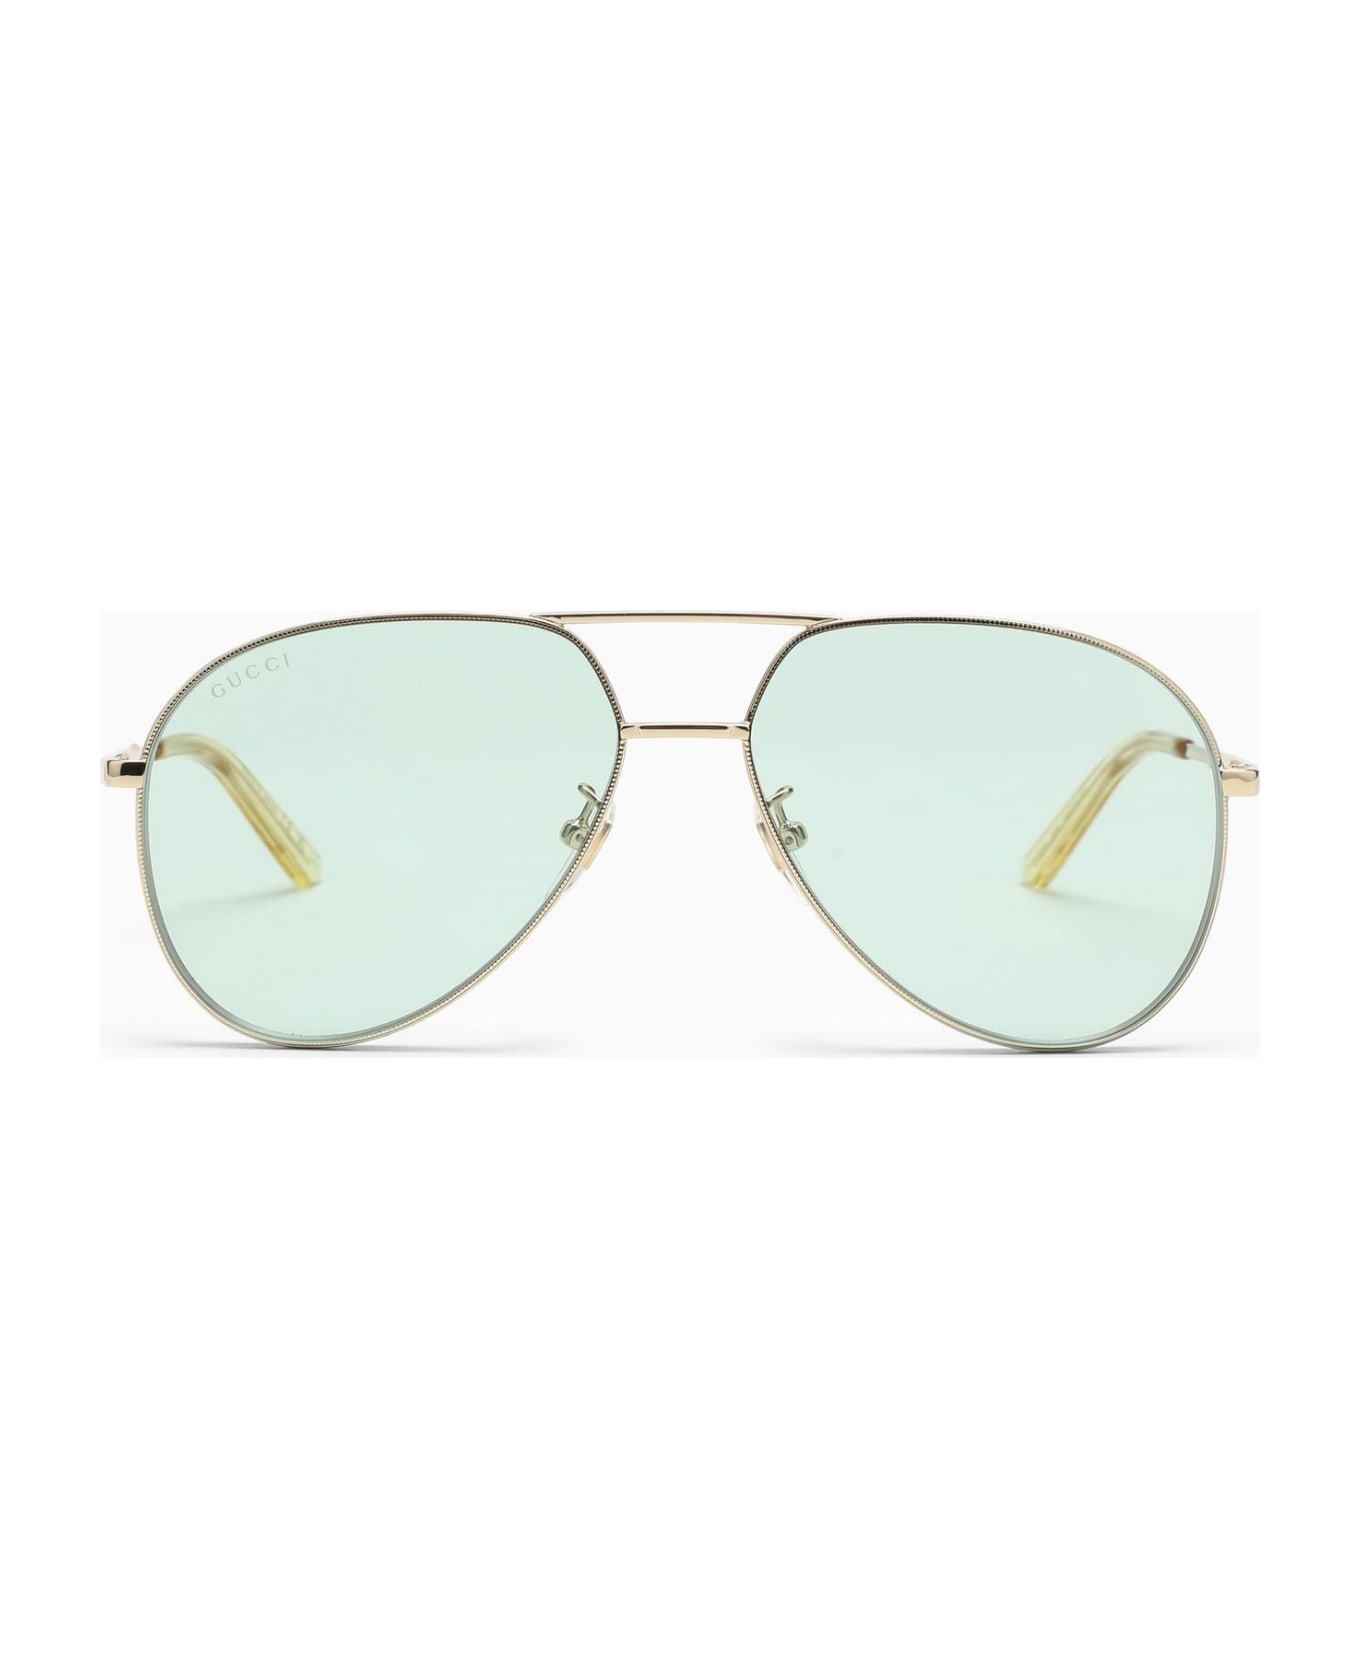 Gucci Eyewear Aviator Green Sunglasses